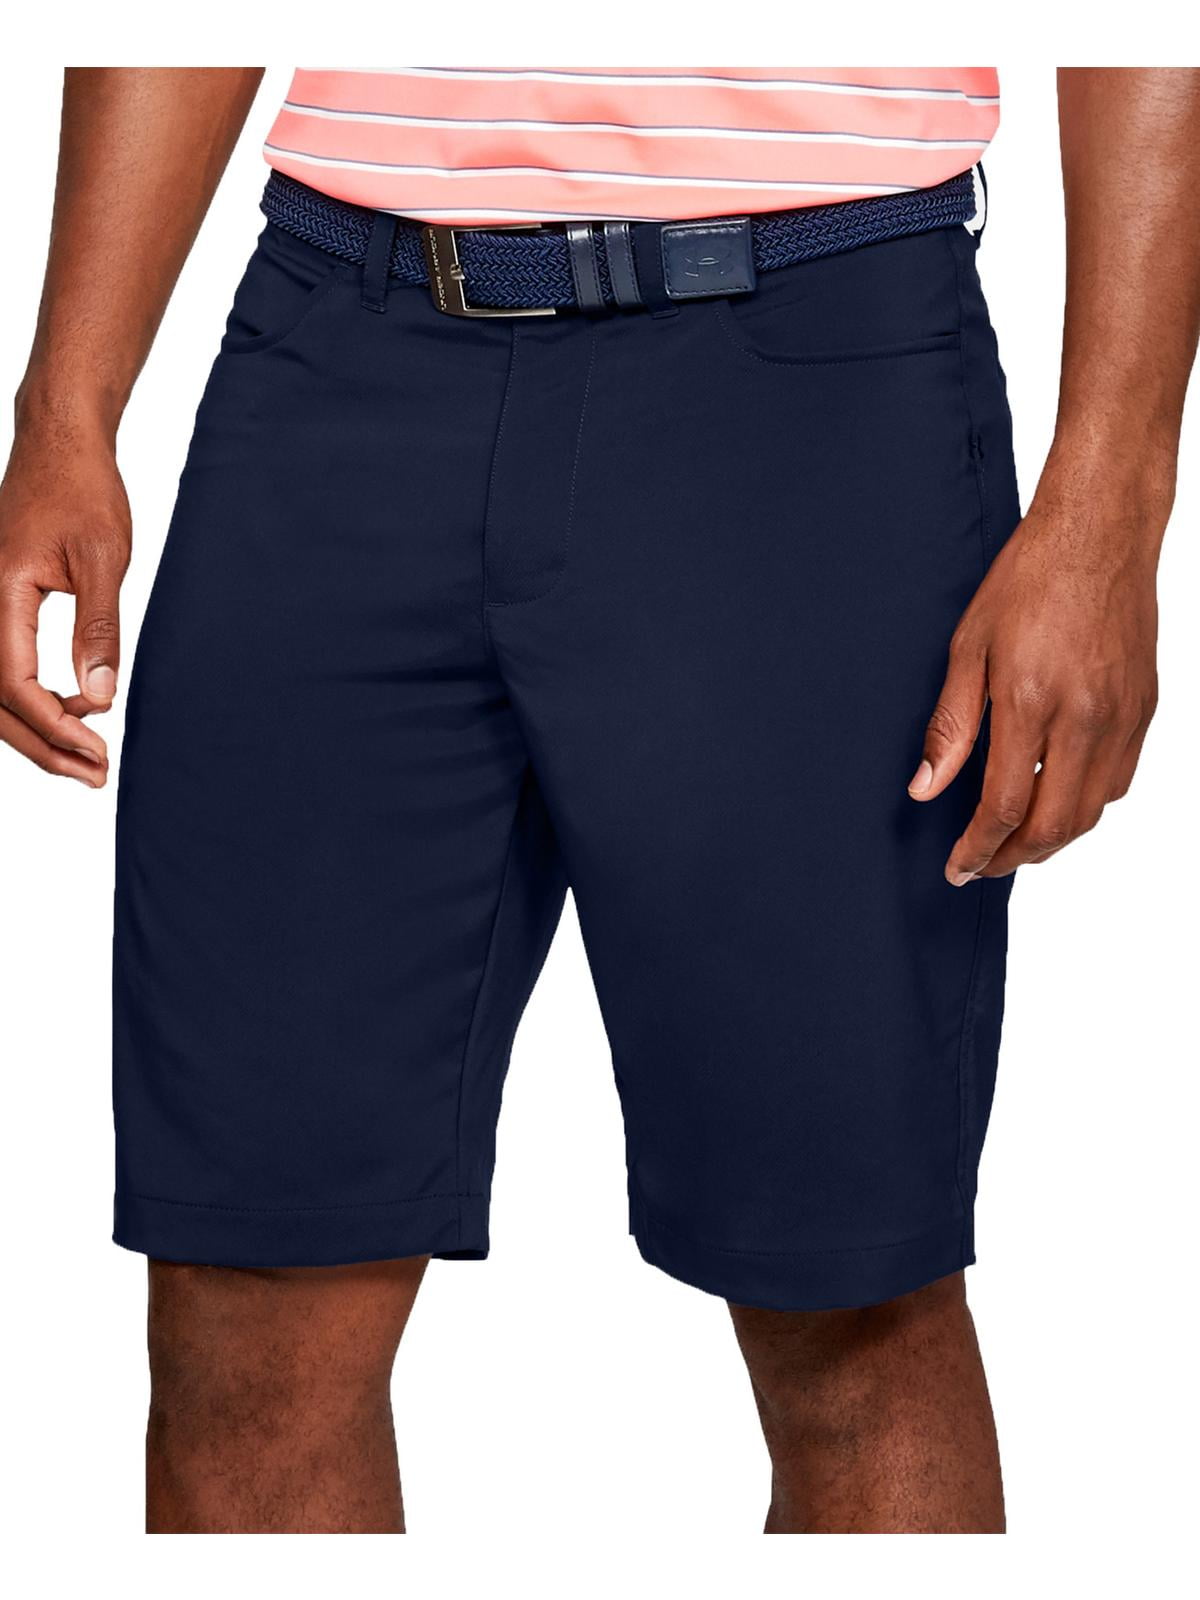 Under Armour Mens Golf Fitness Shorts - Walmart.com